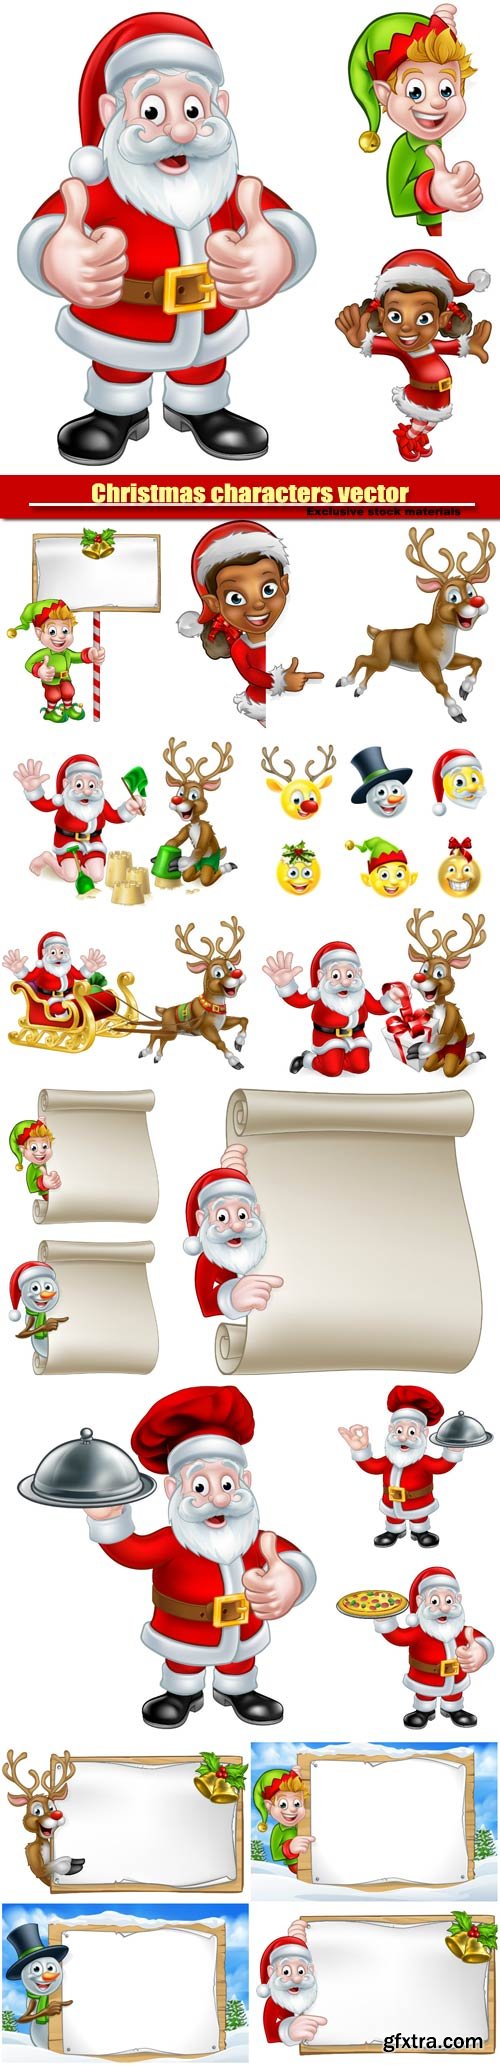 Christmas characters vector, Santa and elves